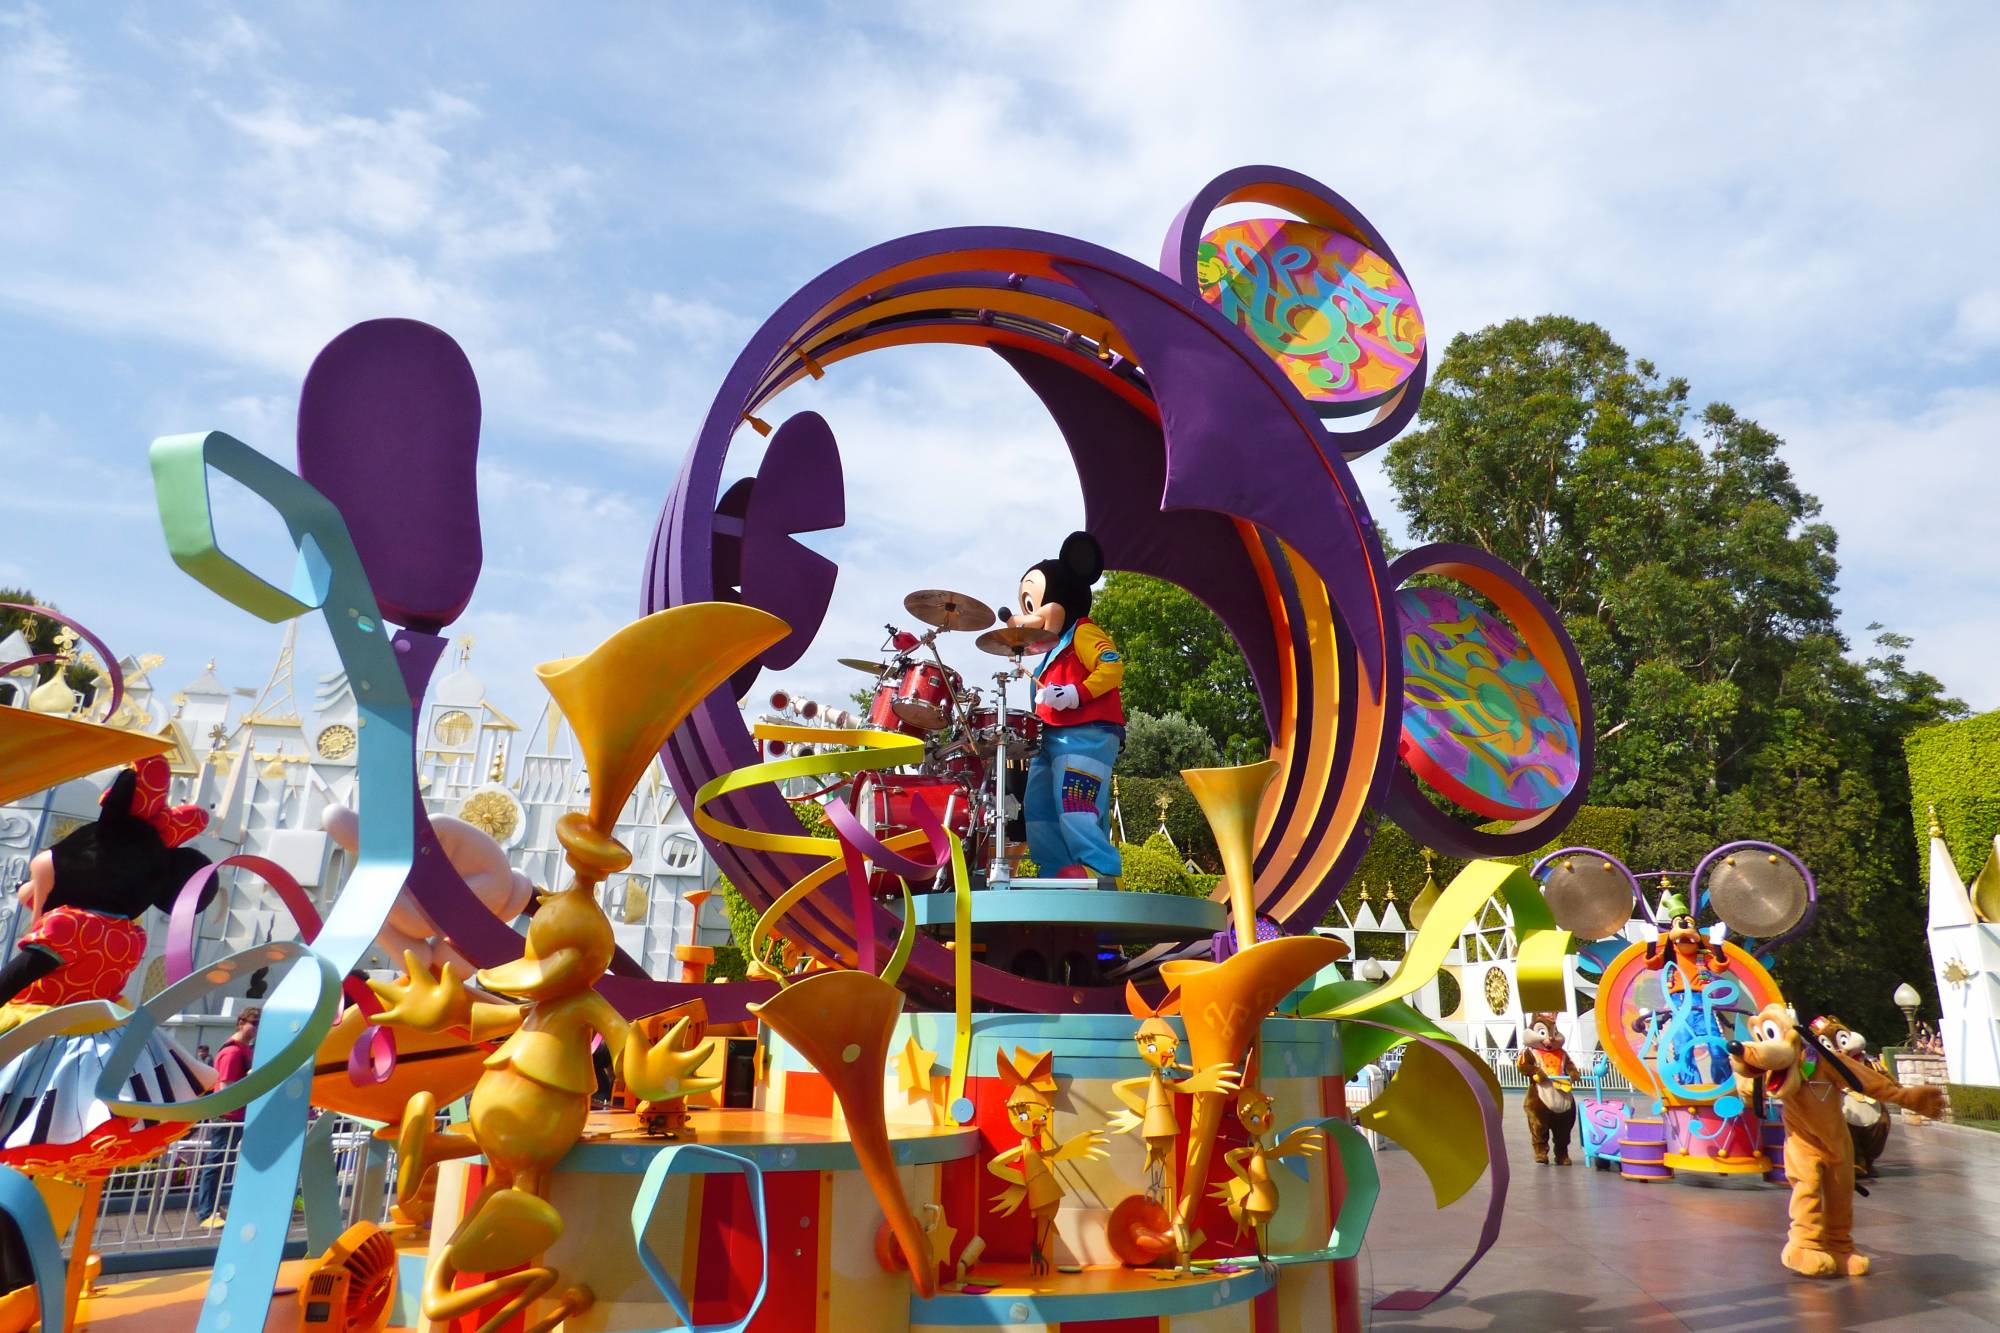 Enjoy Disneyland with all five of your senses! |PassPorter.com